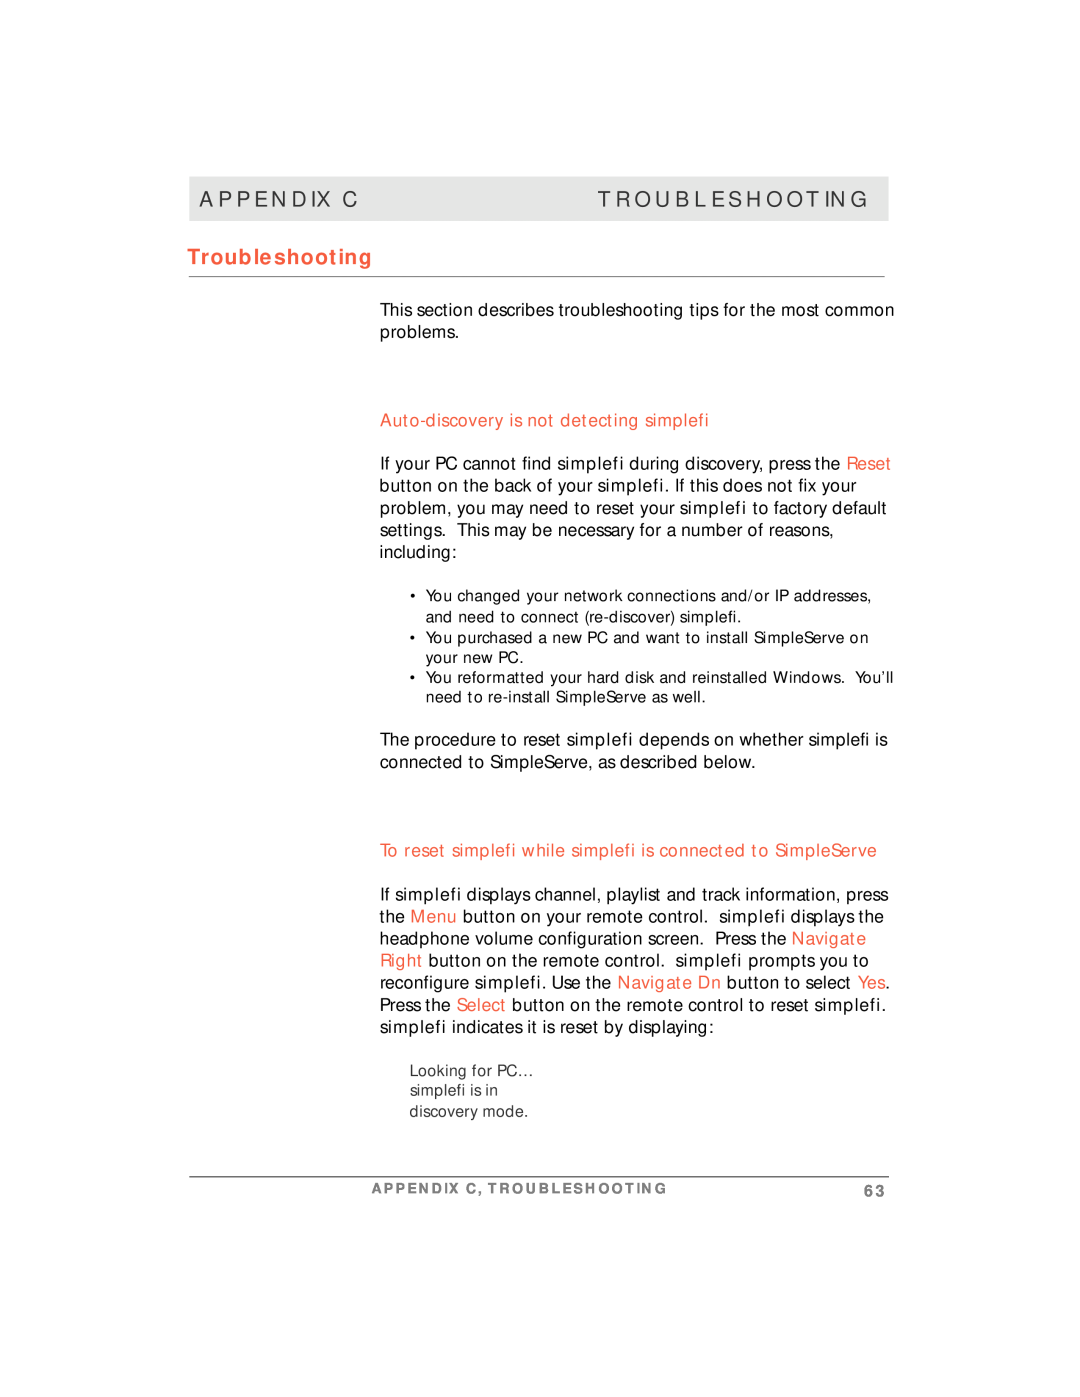 Motorola manual Appendix C, Troubleshooting, Auto-discoveryis not detecting simplefi 